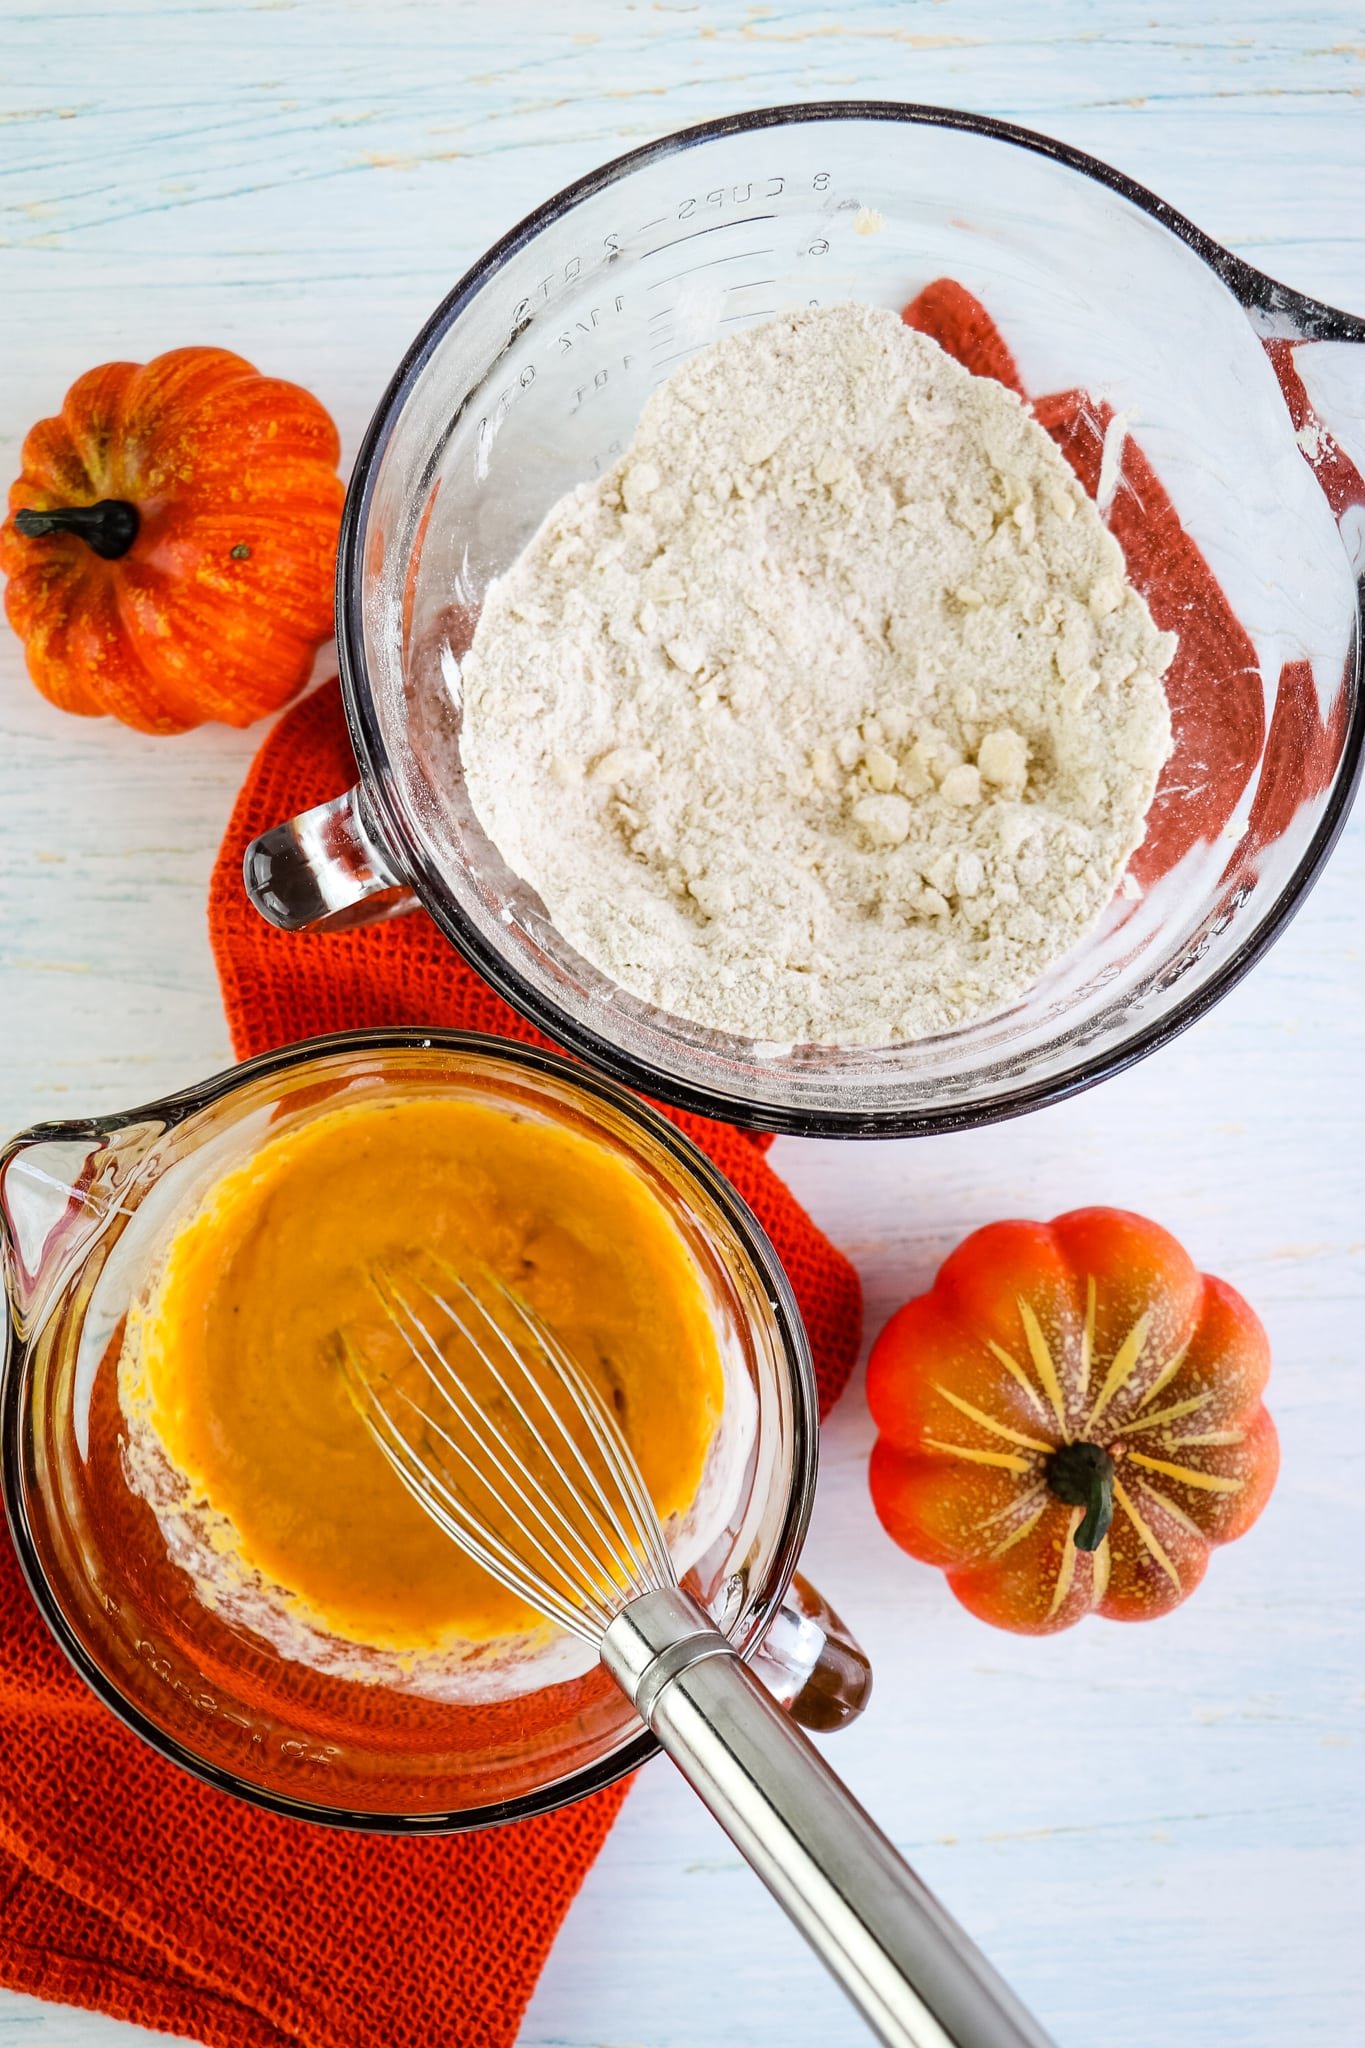 Dry ingredients and wet ingredients in bowls for pumpkin scones recipe.